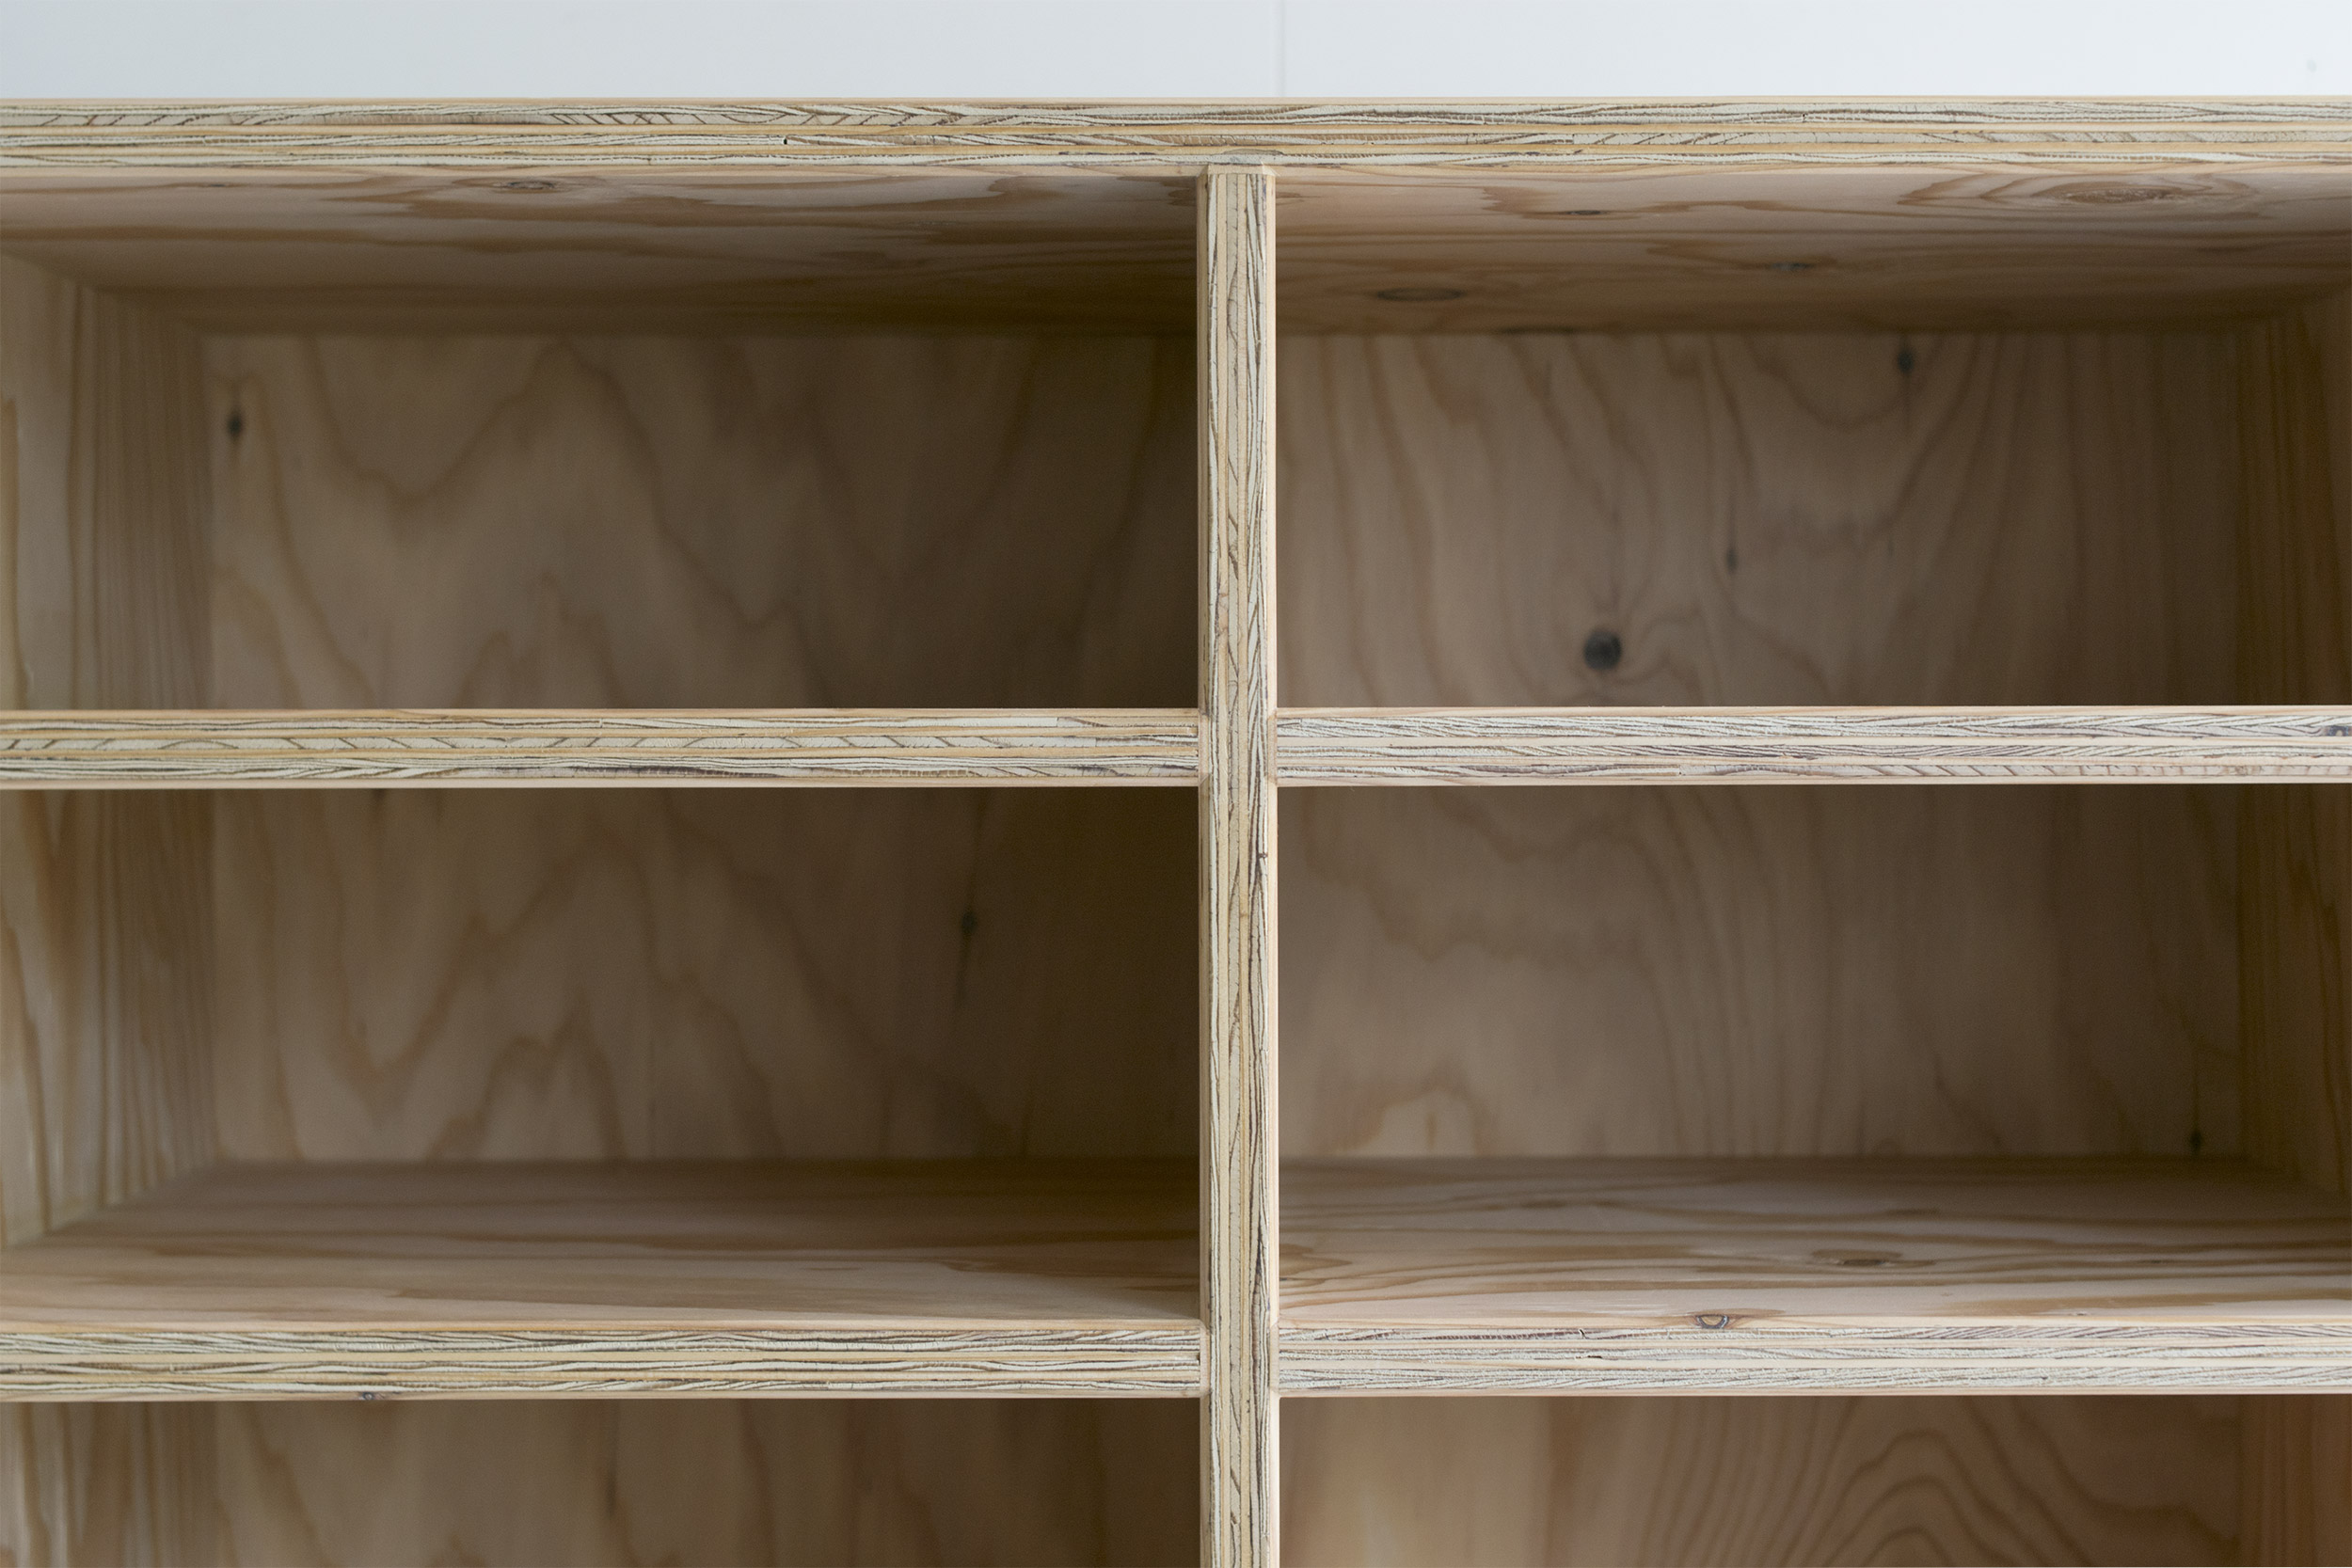 Tana ナラ材の本棚とラーチ材の収納棚 オーダー家具と無垢天板 東京 Woodwork